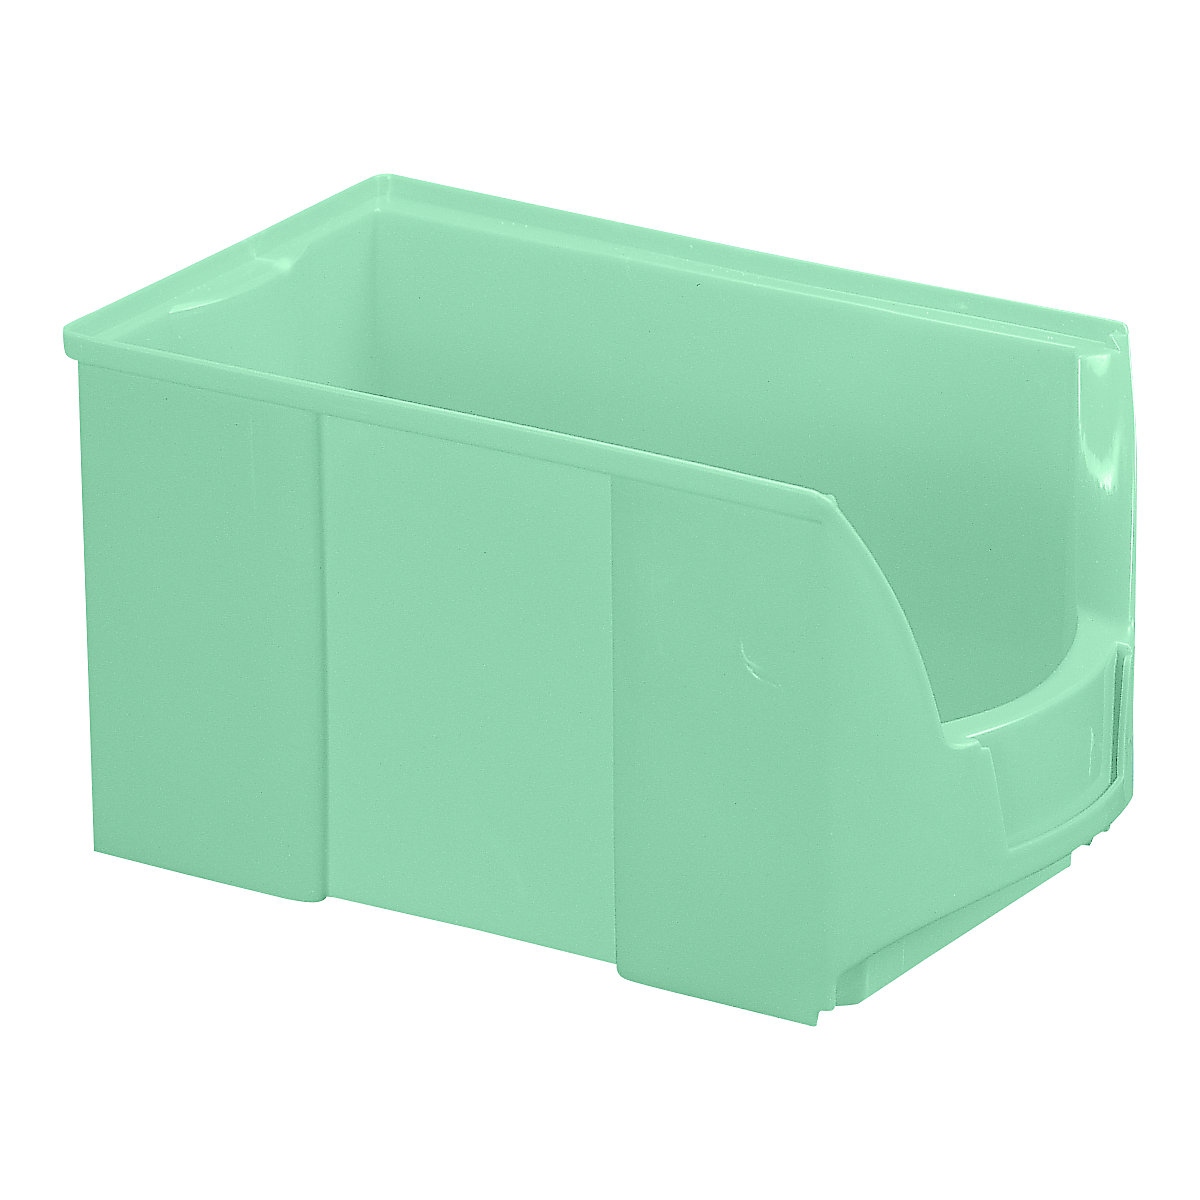 FUTURA-magazijnbak van polyethyleen, l x b x h = 360 x 208 x 201 mm, VE = 8 stuks, groen